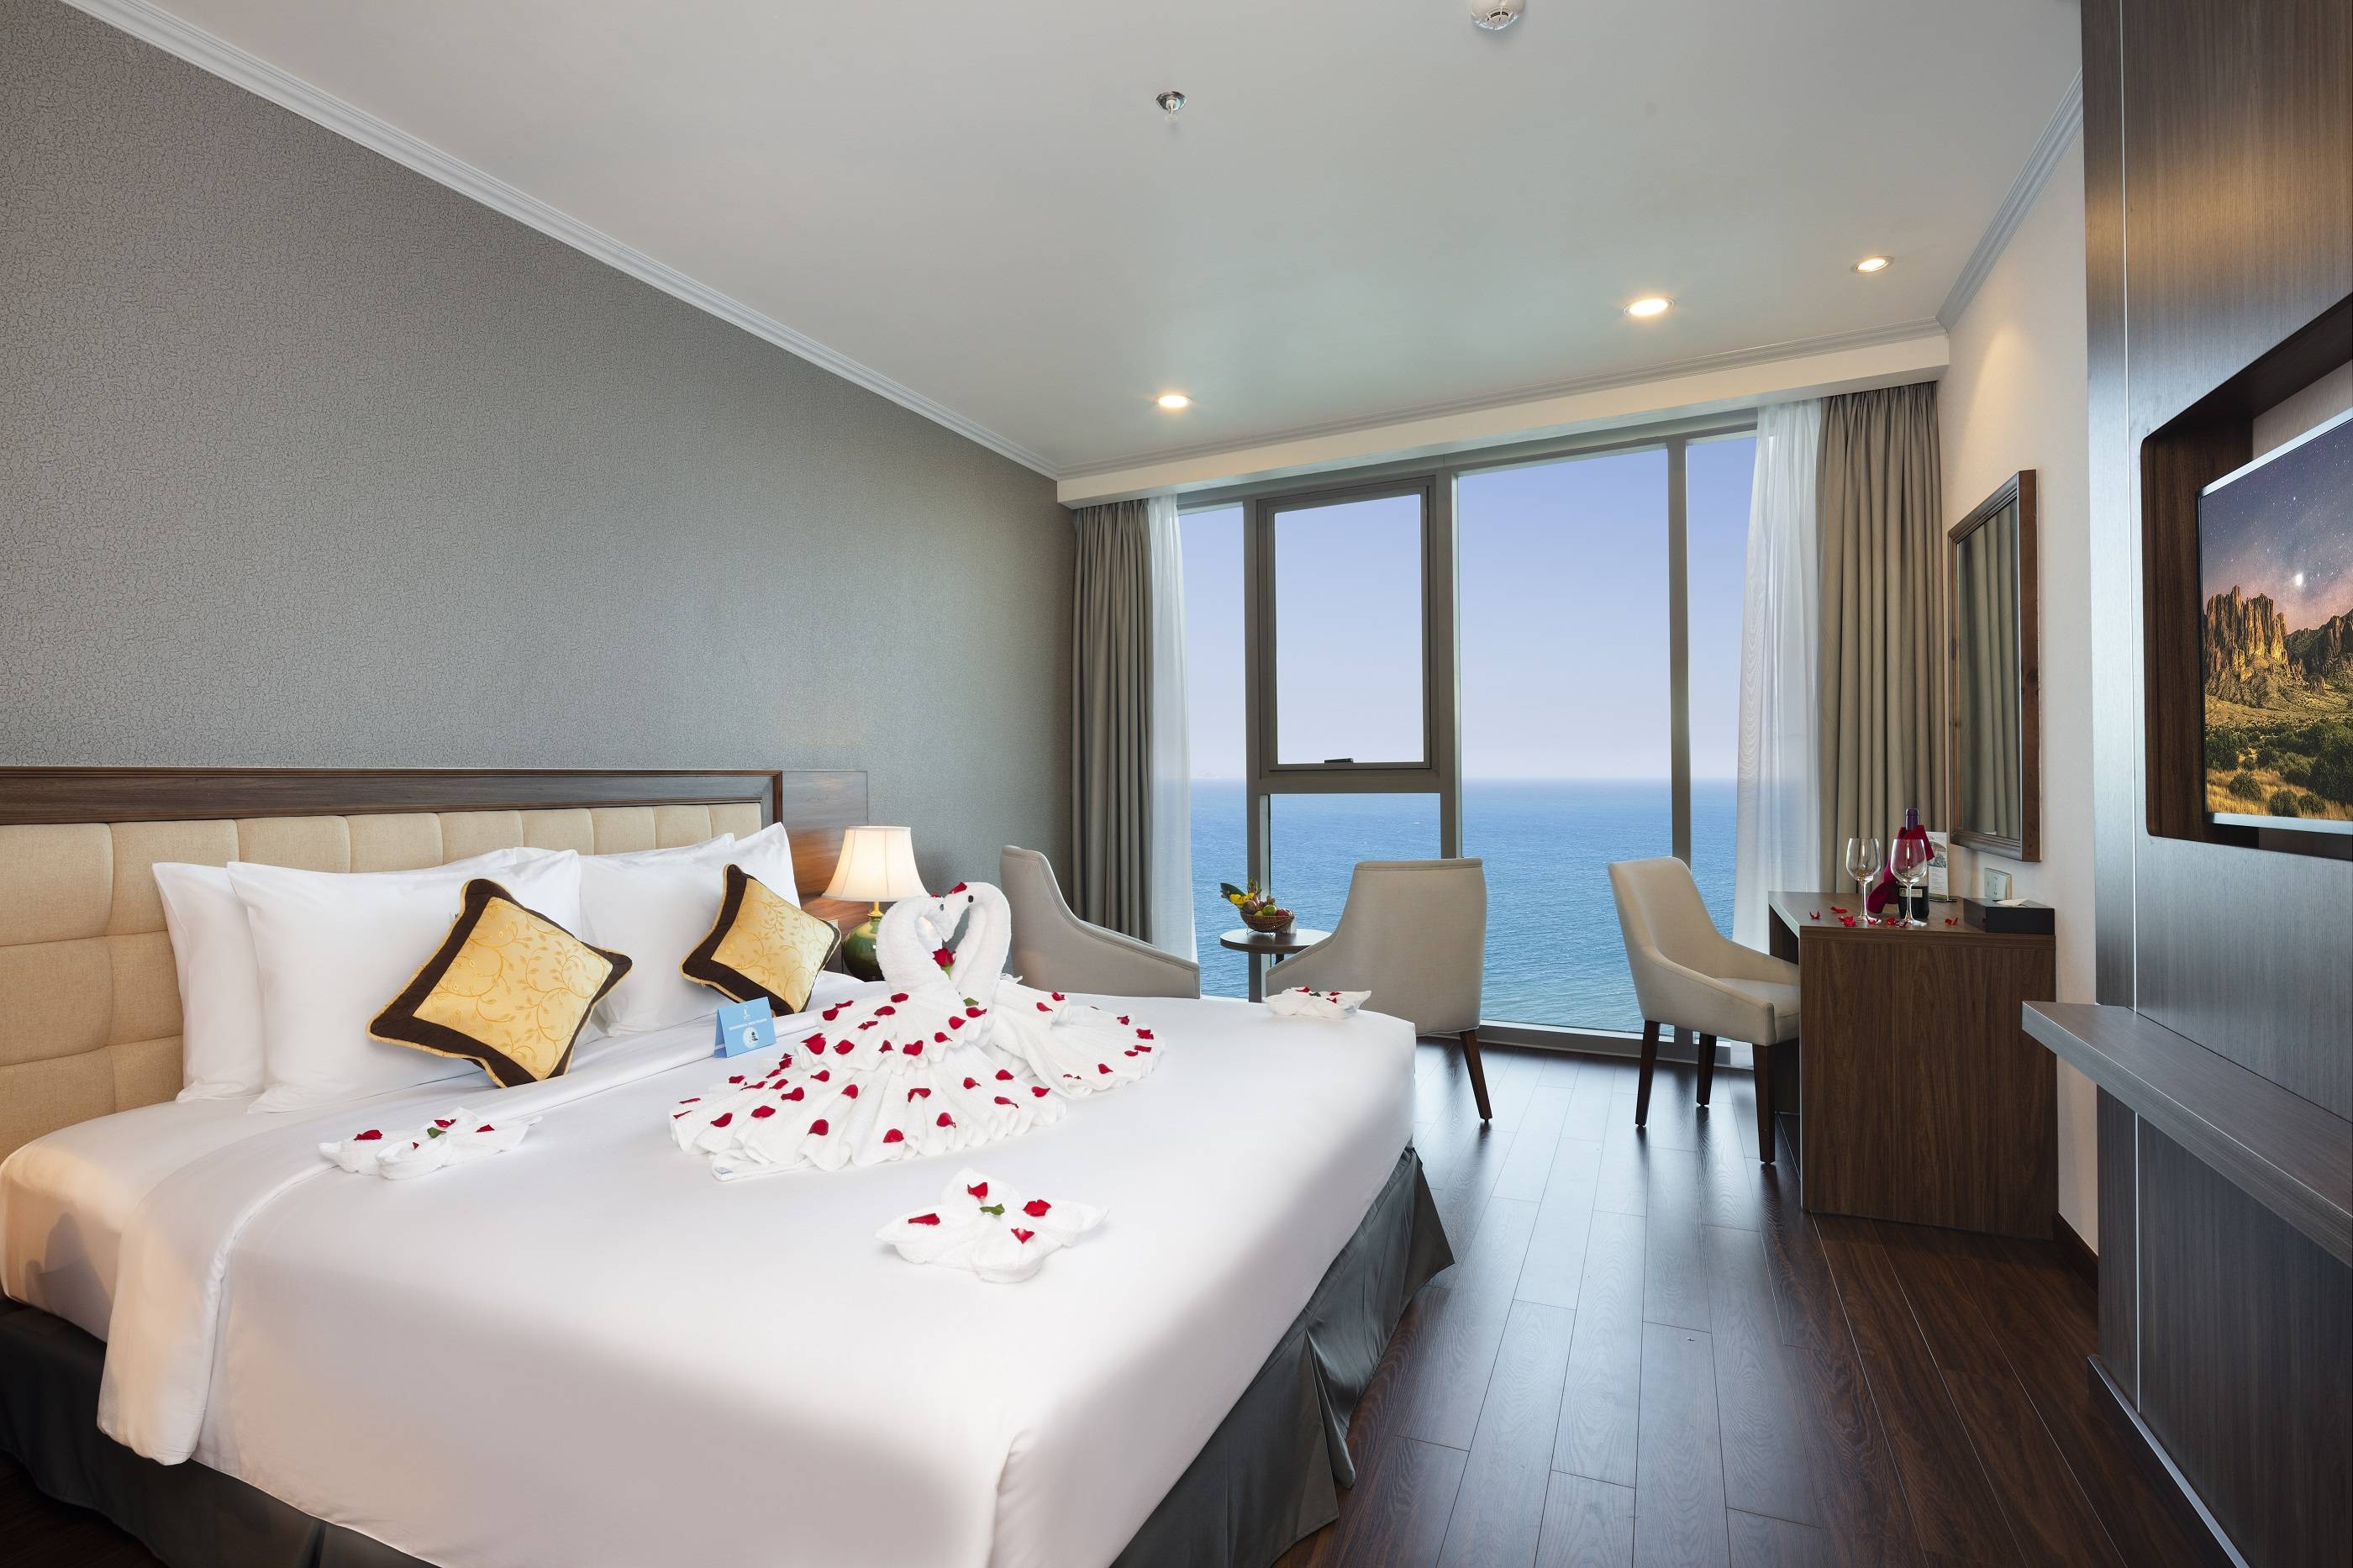 Nha trang horizon hotel 5* - вьетнам, кханьхоа - отели | пегас туристик